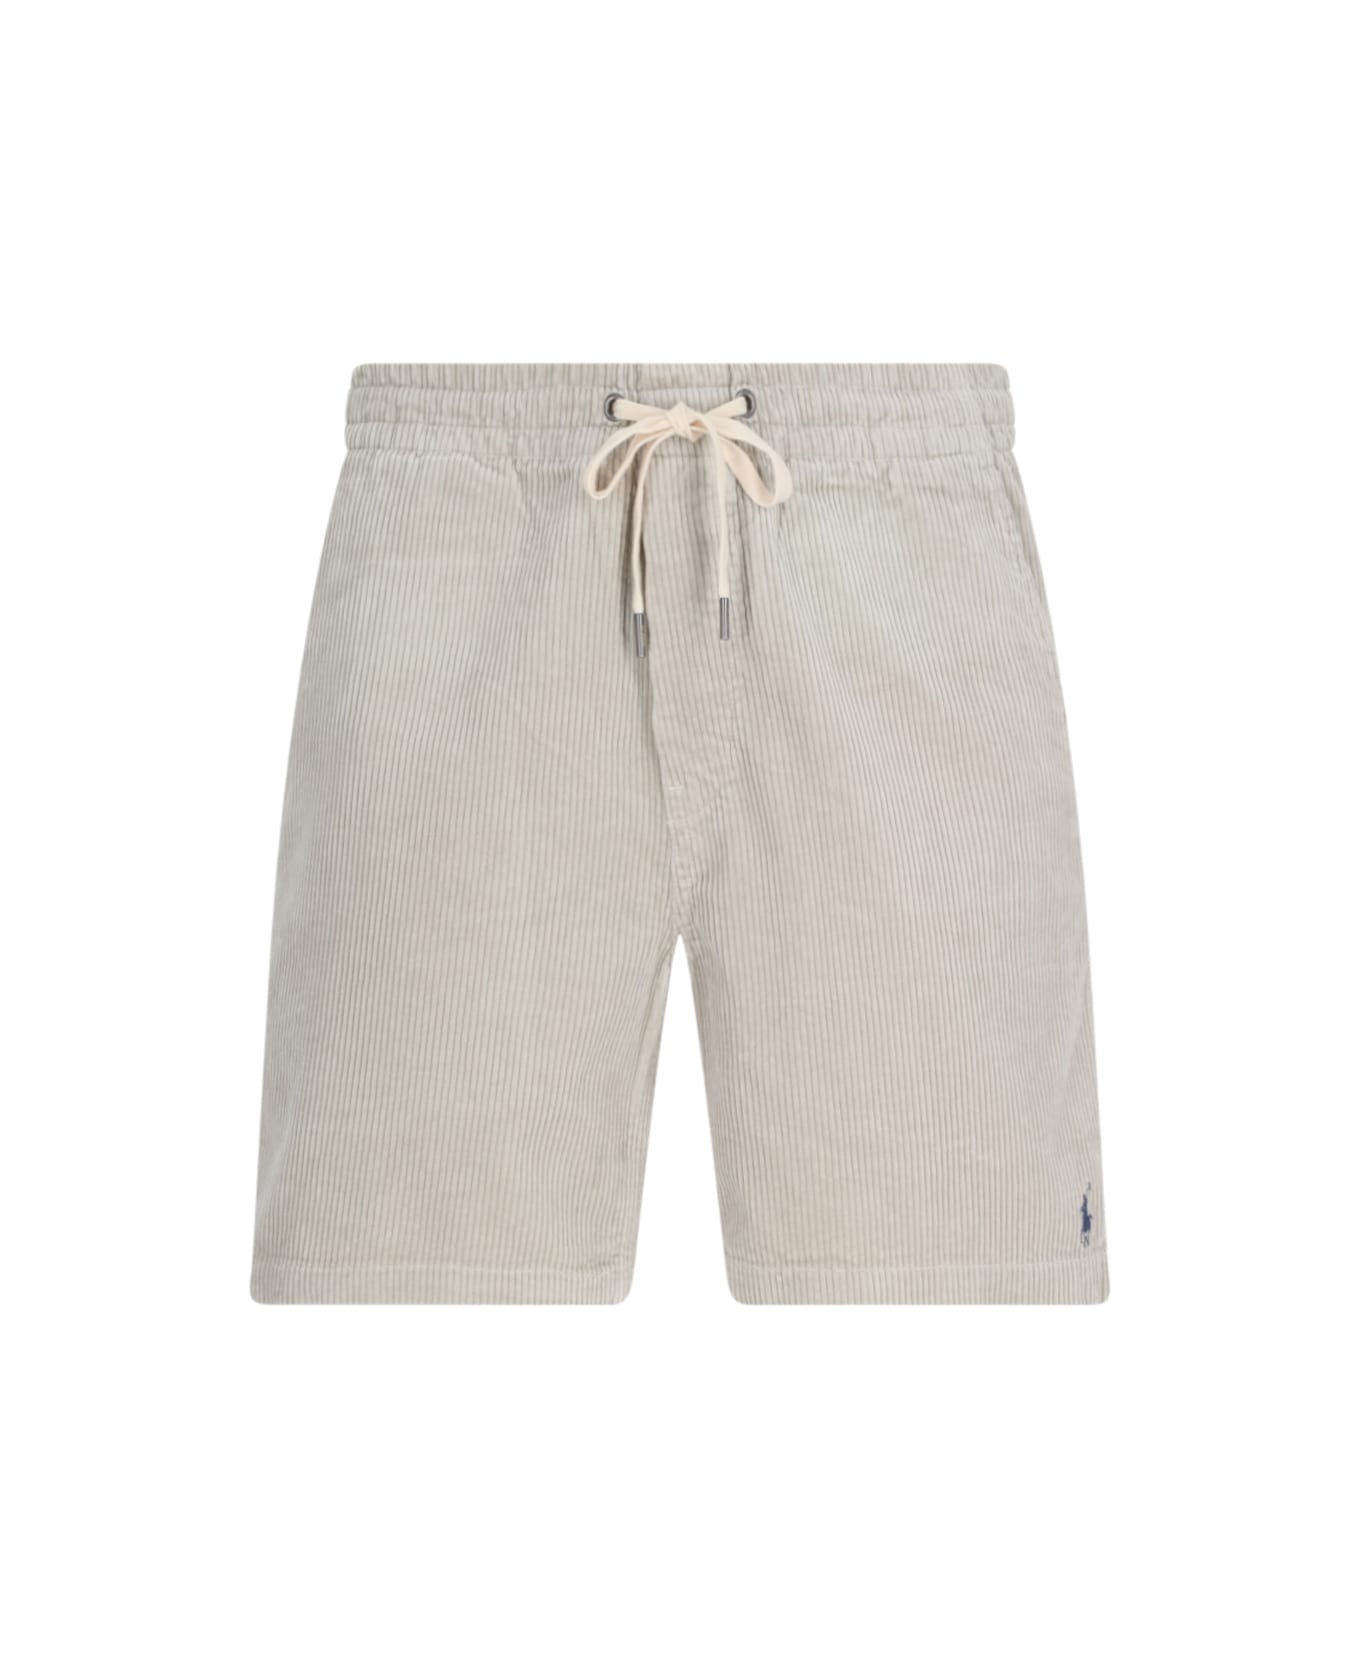 Polo Ralph Lauren Ribbed Shorts - Beige